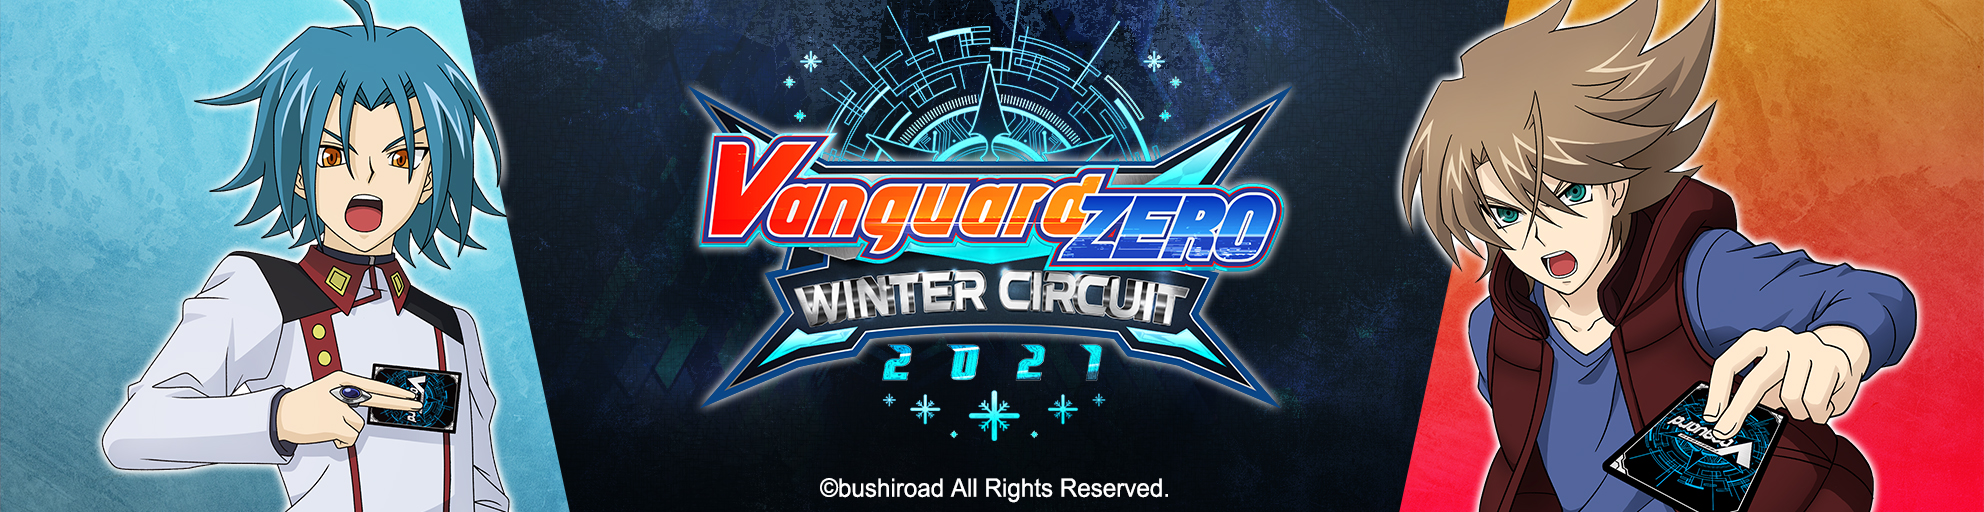 Cardfight!! Vanguard Zero - Winter Circuit 2021